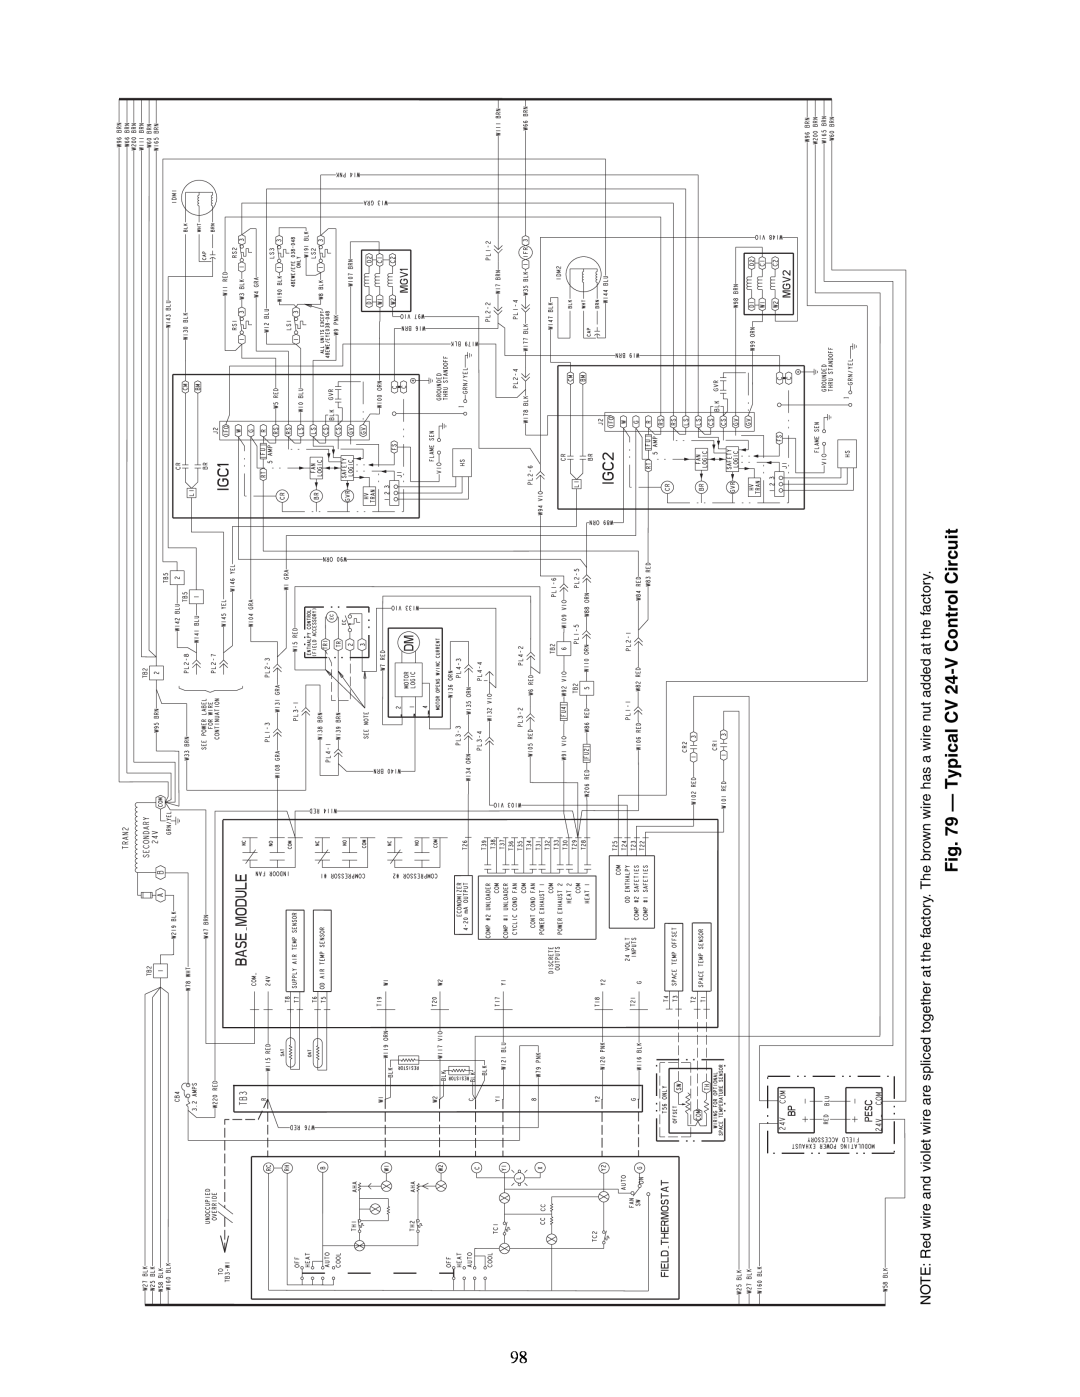 Carrier 48AW, 48EW, 48EY024-068, 48AY020-060, 48EK, 48AK, 48AJ, 48EJ specifications Typical CV 24-VControl Circuit 